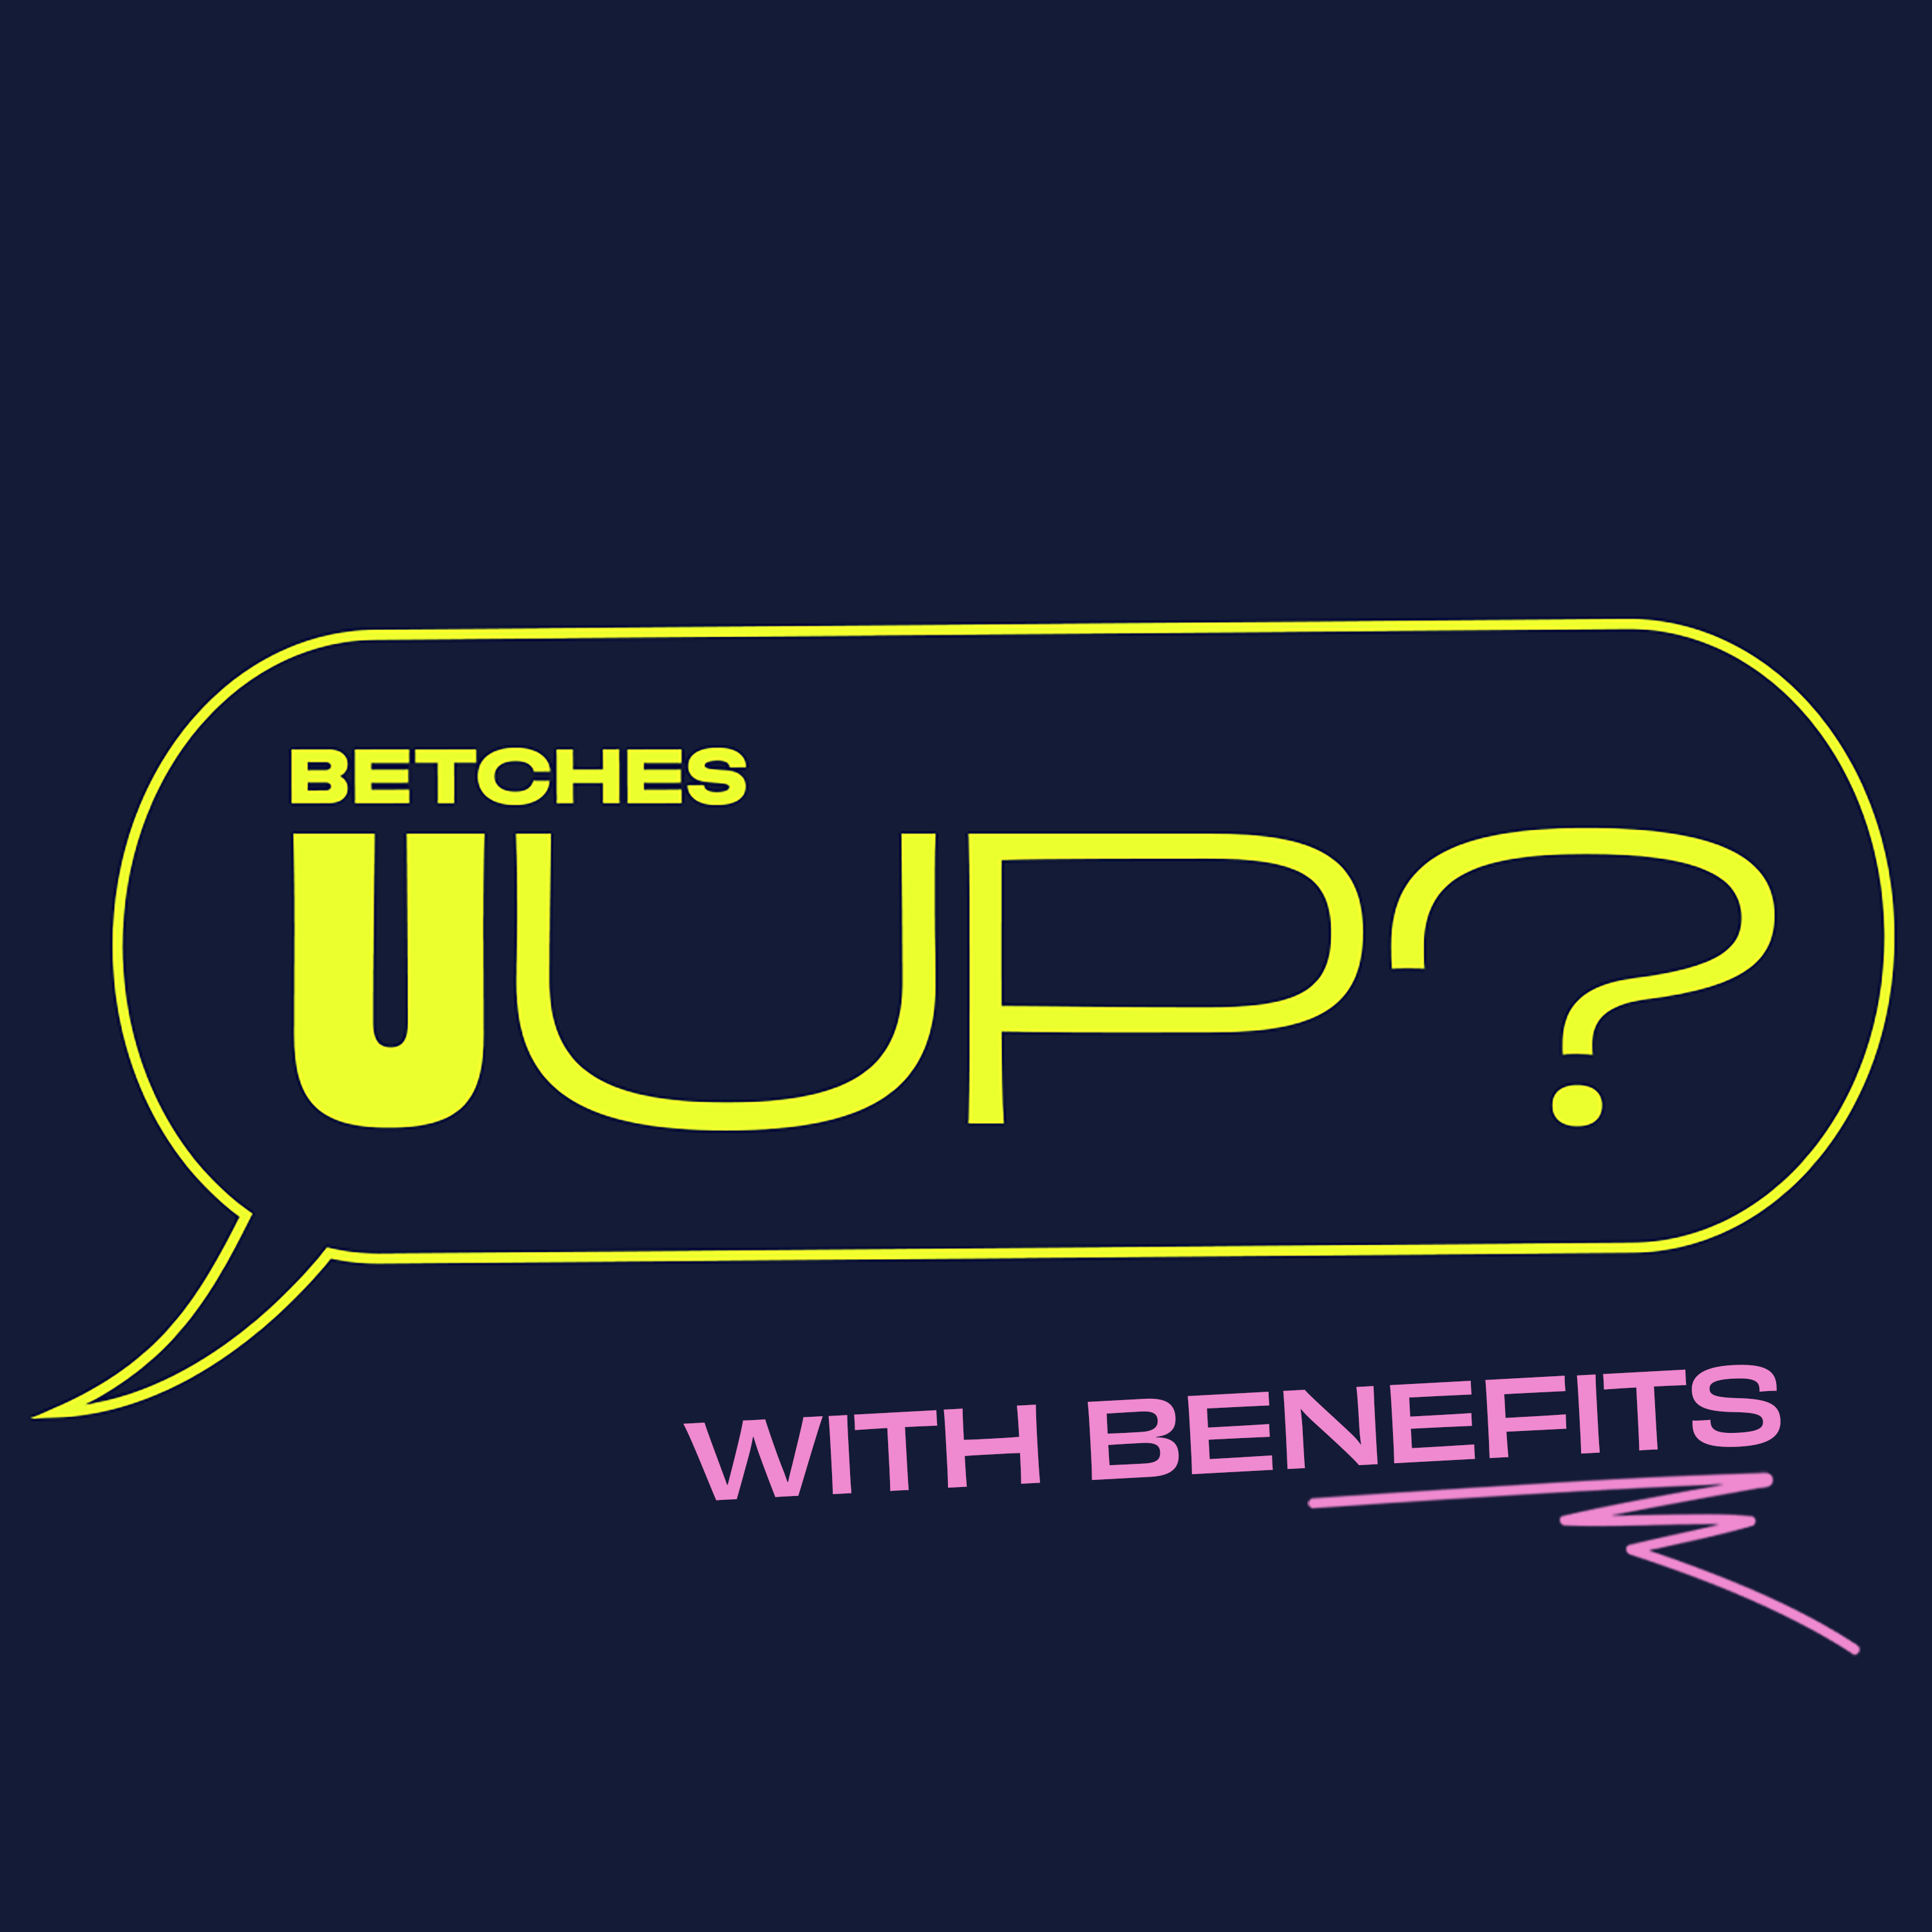 BETCHES logo